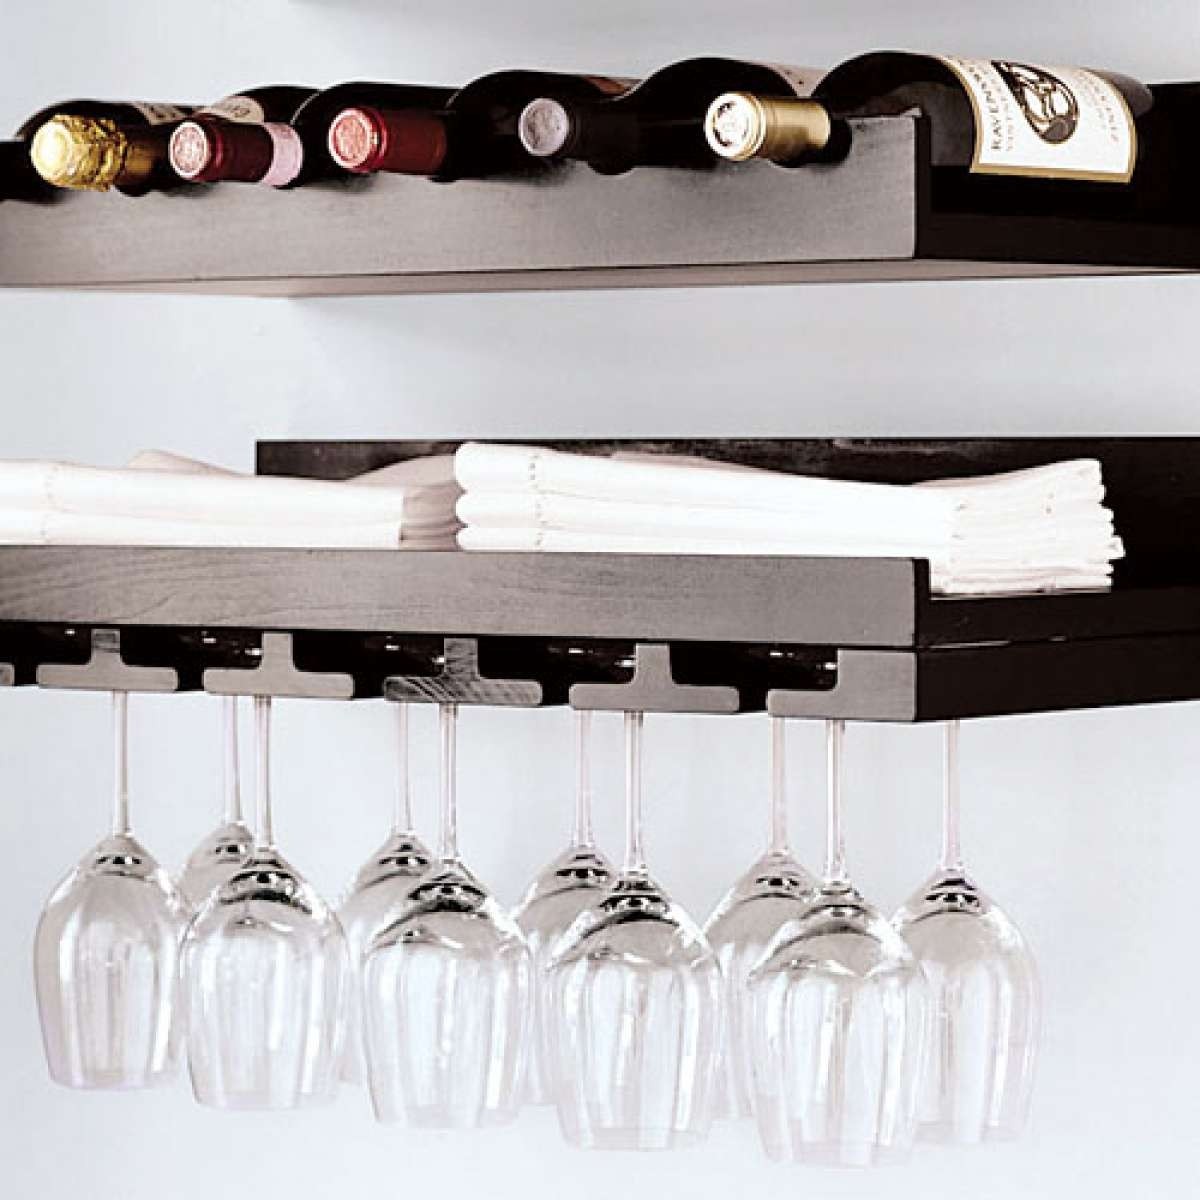 Homemade wine glass rack